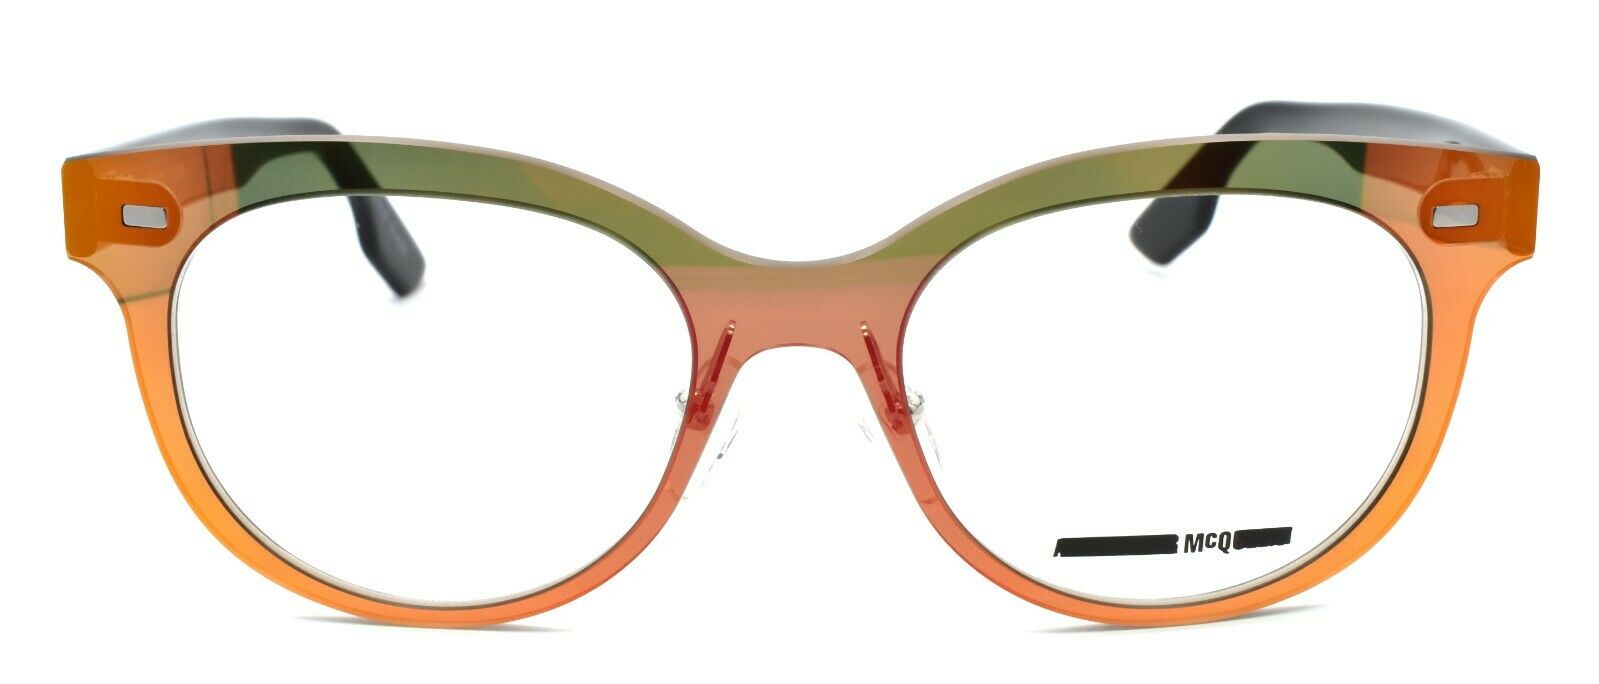 2-McQ Alexander McQueen MQ0009O 001 Women's Eyeglasses 50-18-140 Orange / Black-889652002262-IKSpecs